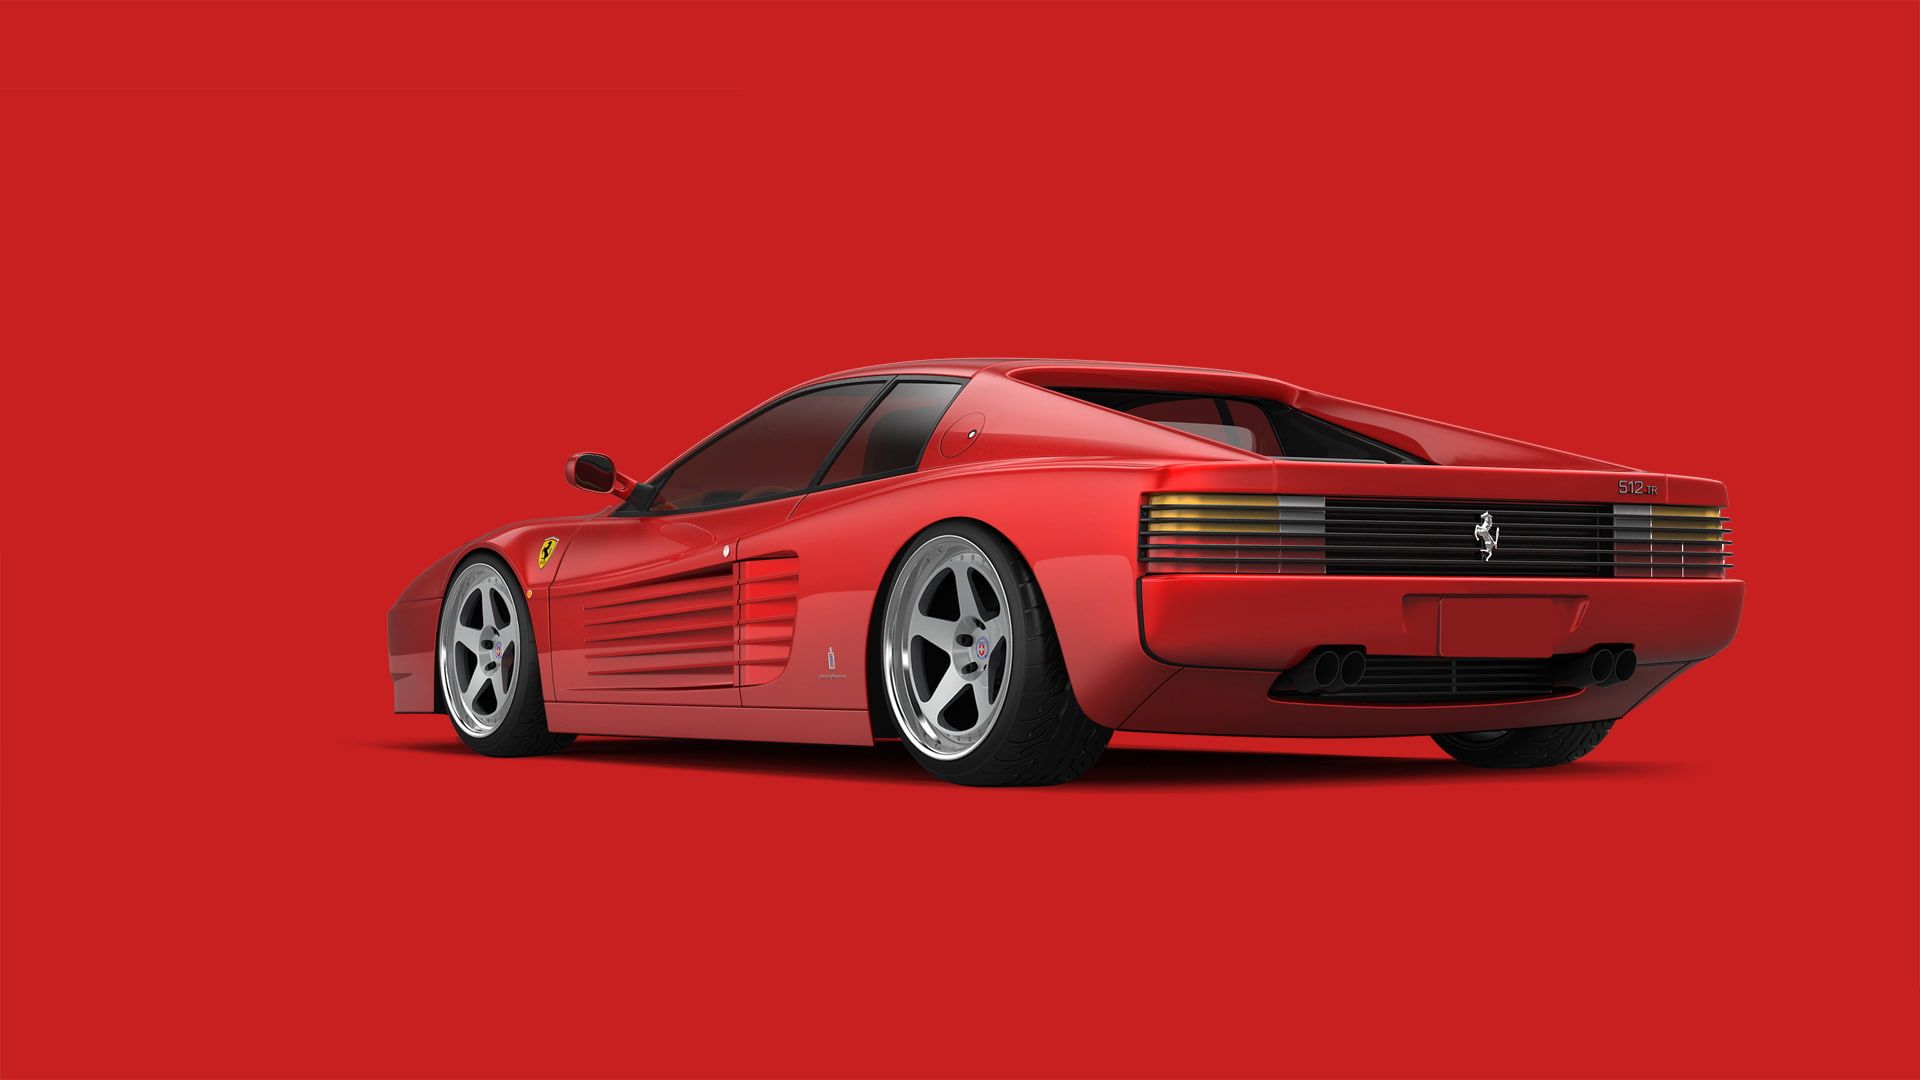 red #supercar #ferrari #testarossa 512 tr P #wallpaper #hdwallpaper #desktop. Super cars, Ferrari, Ferrari testarossa